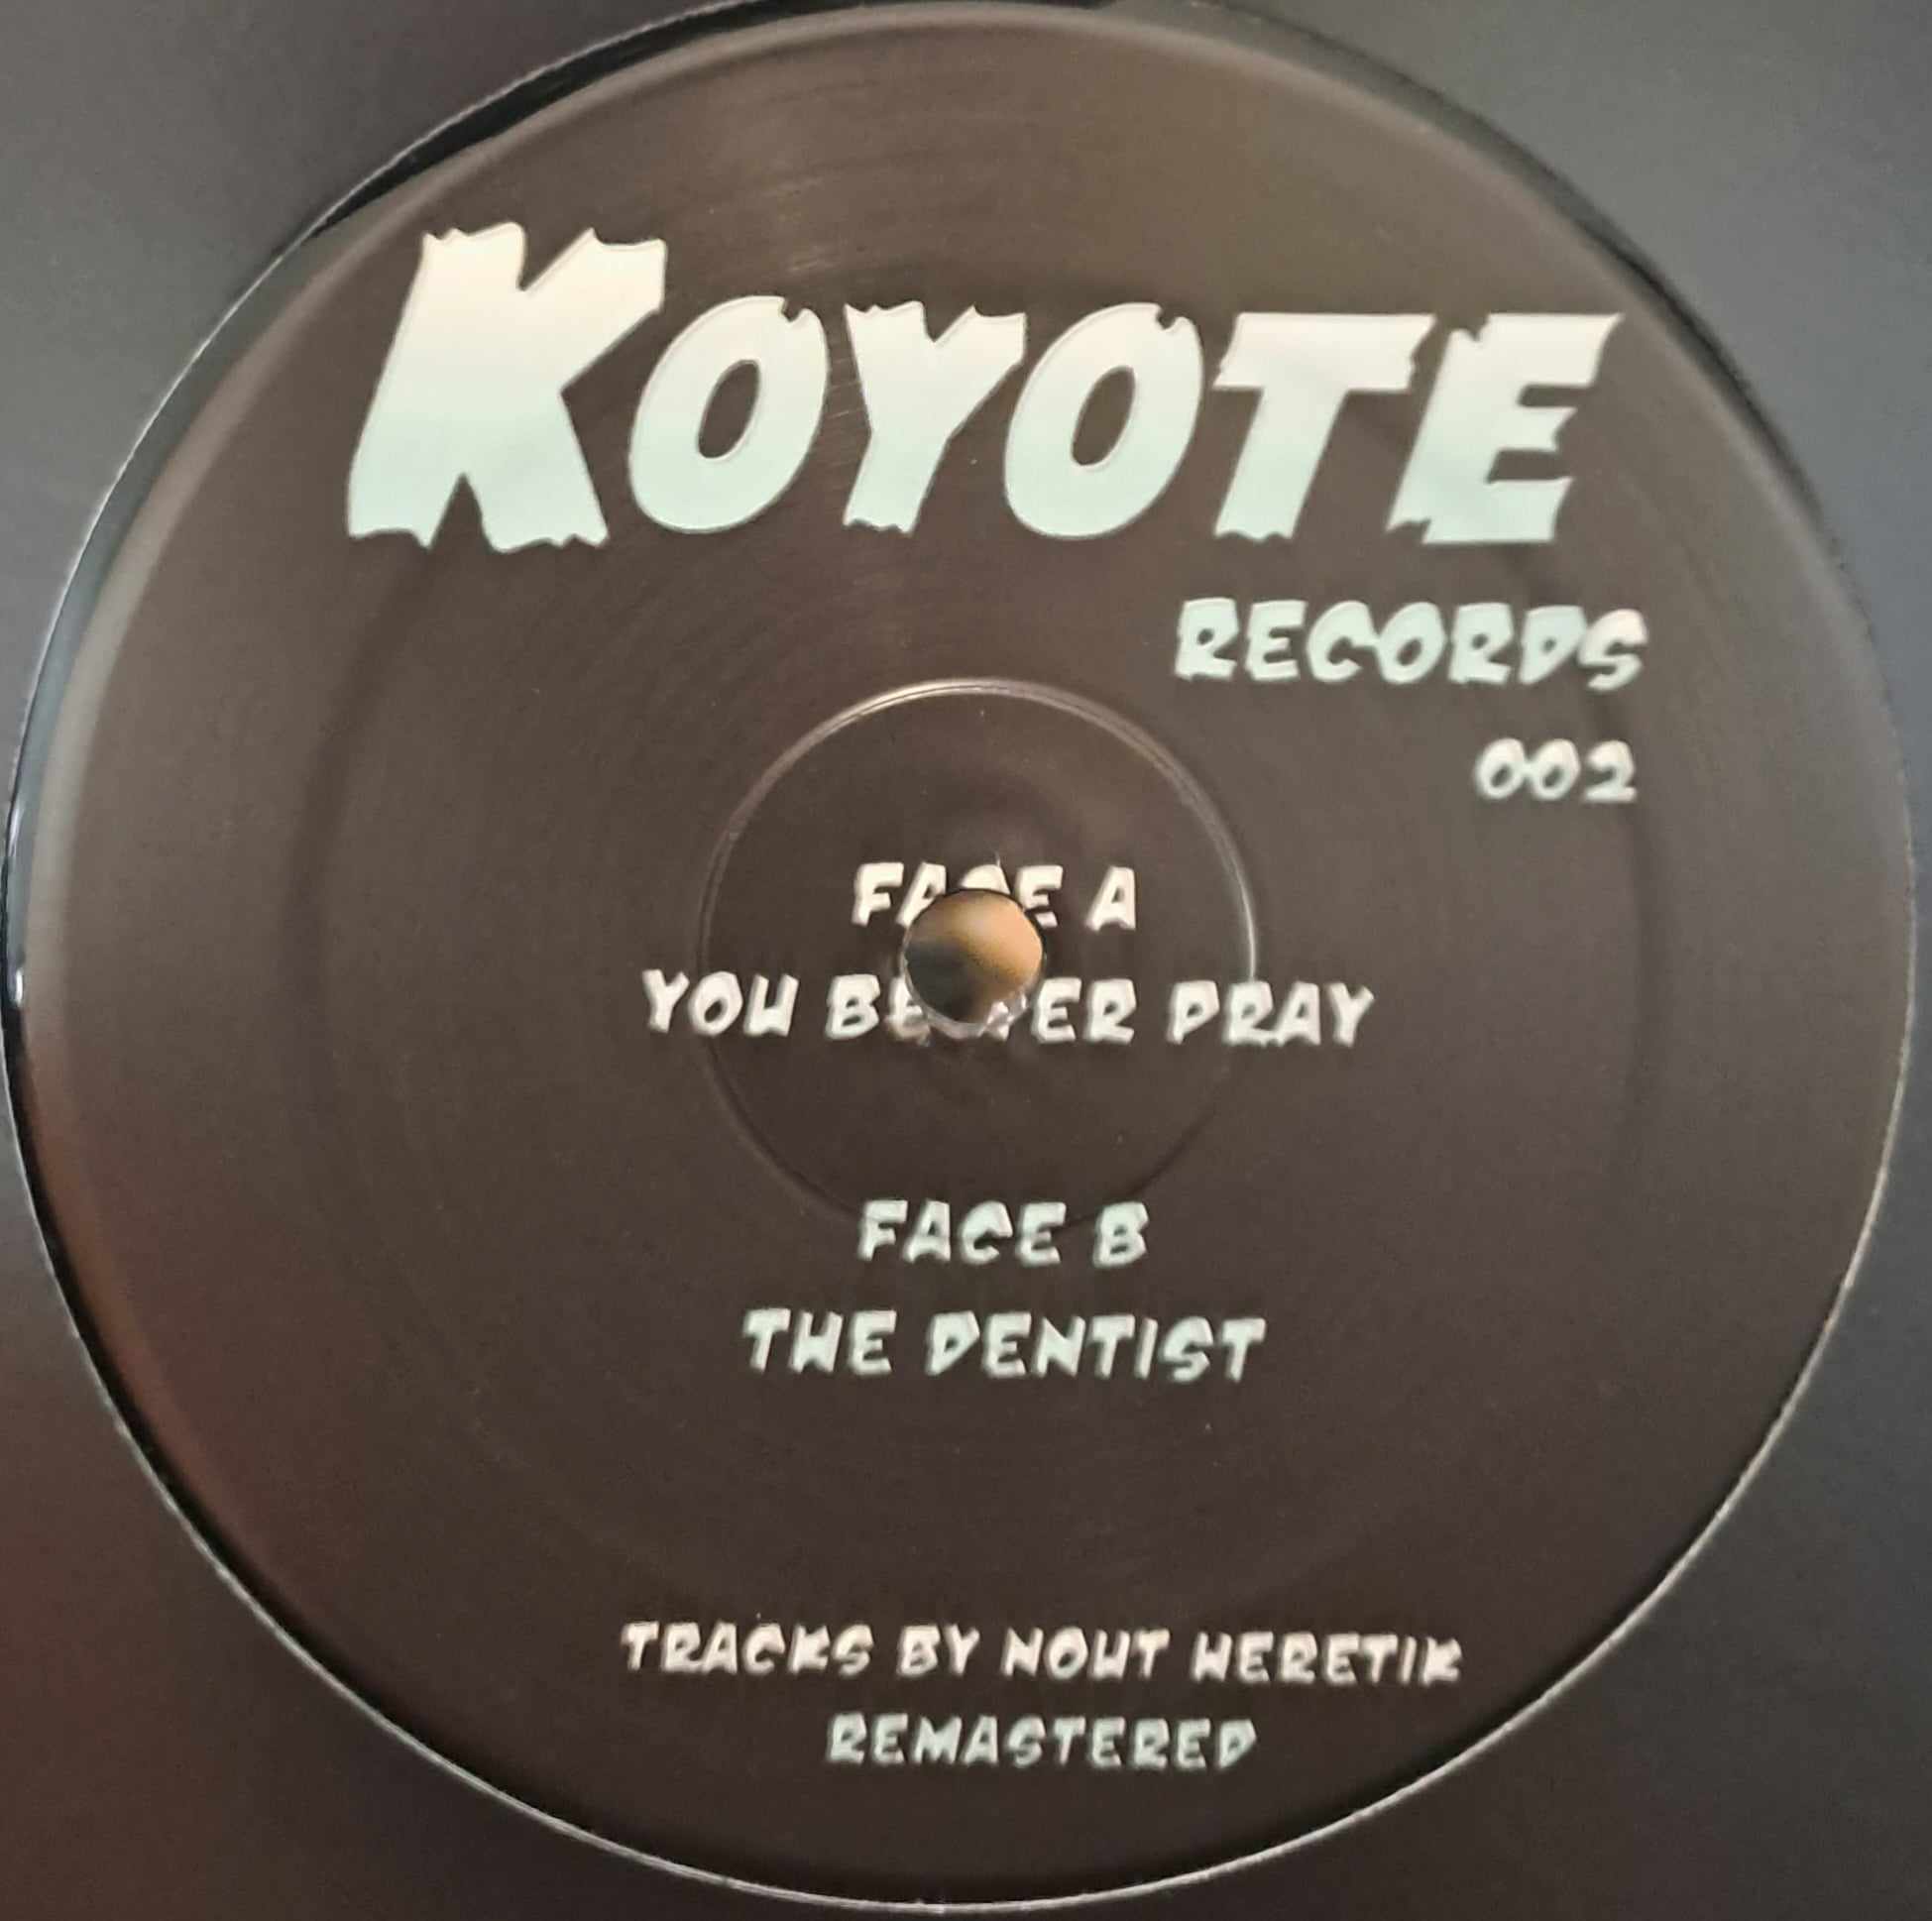 Koyote 02 (RP2023) (dernières copies en stock) - vinyle freetekno